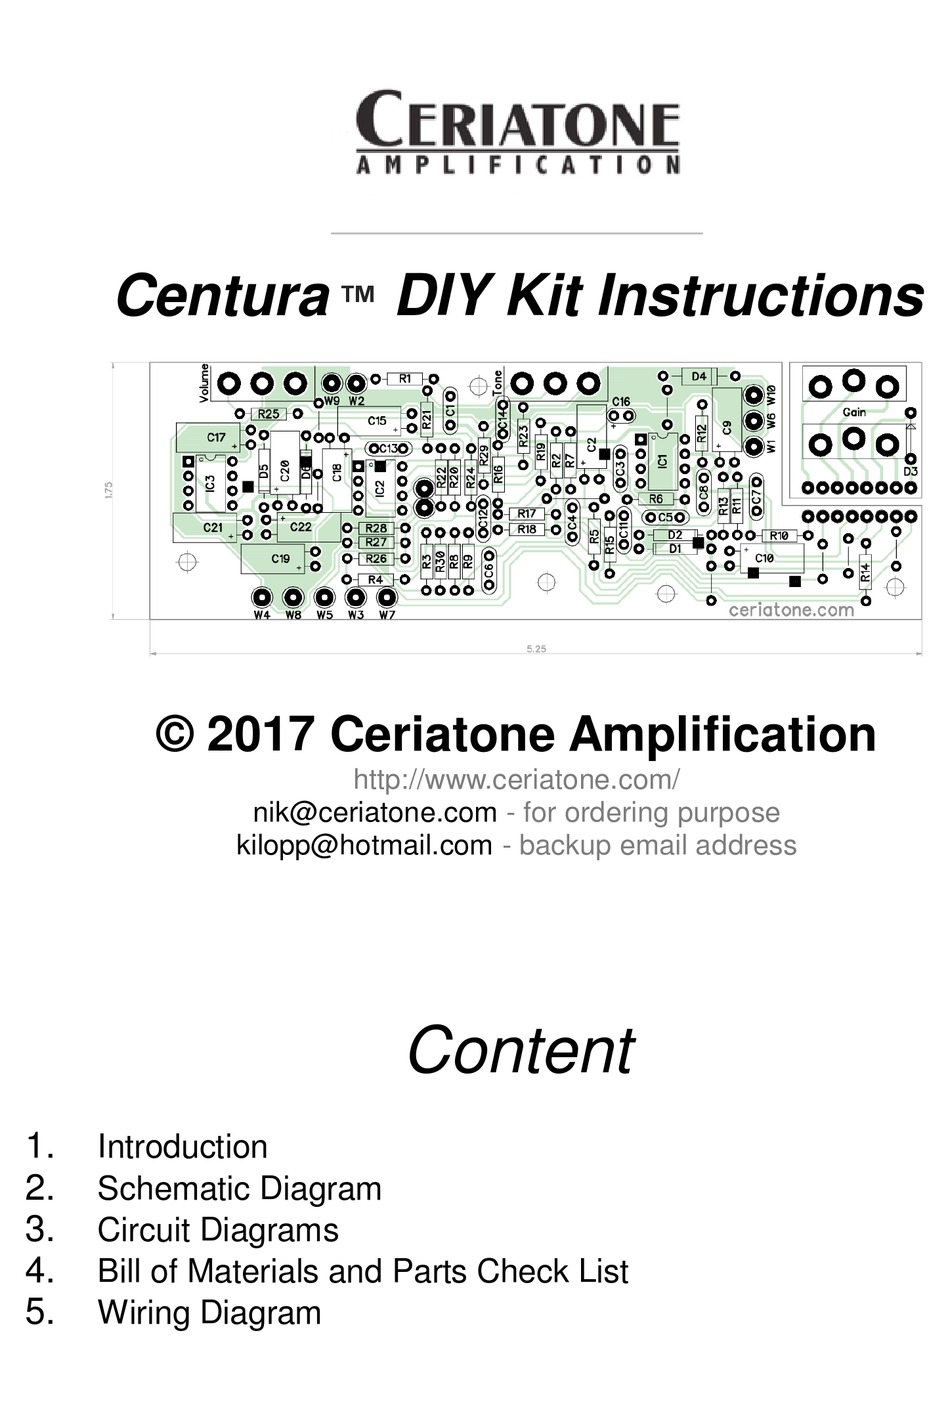 Wiring Diagram - Ceriatone Centura Series Instructions Manual [Page 7] |  ManualsLib